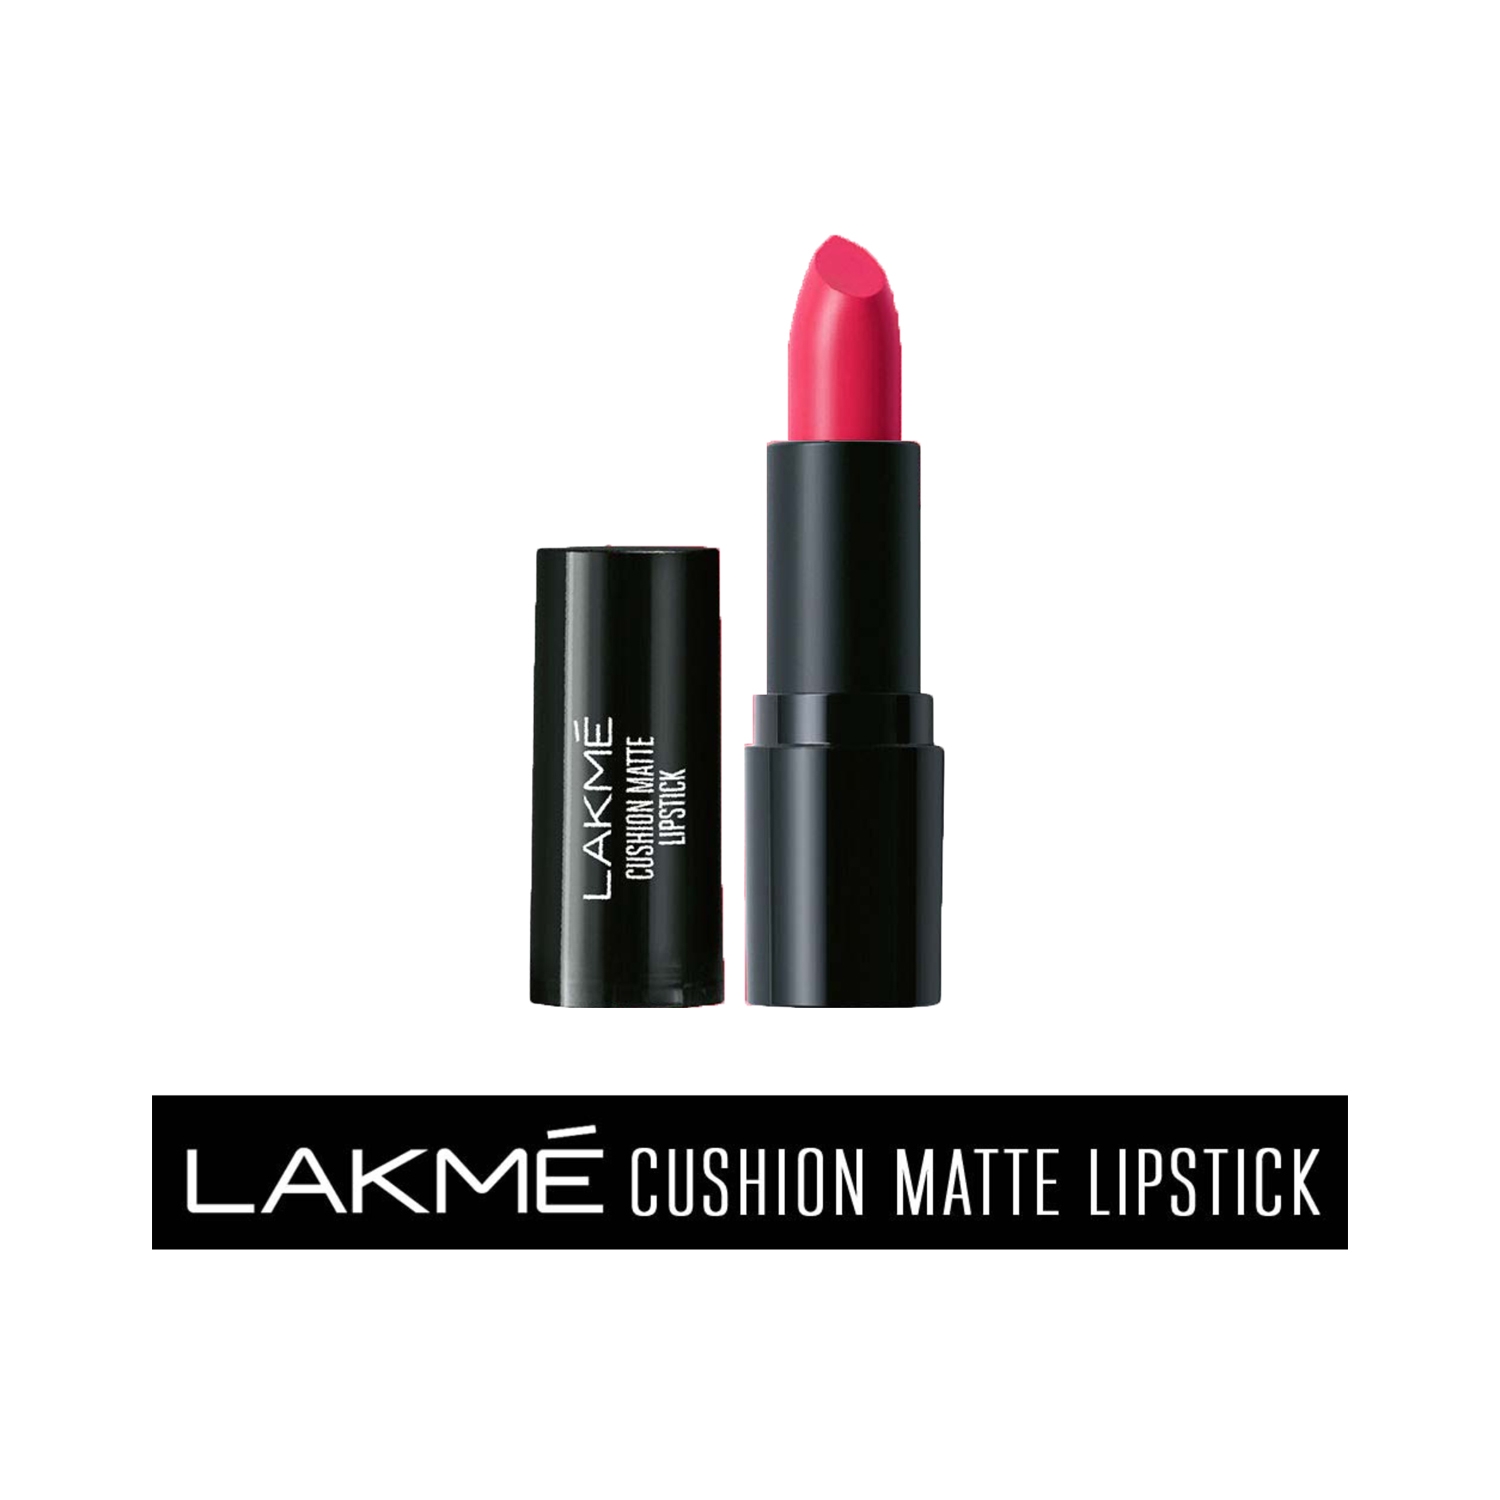 Lakme | Lakme Cushion Matte Lipstick - Pink Ruby (4.5g)